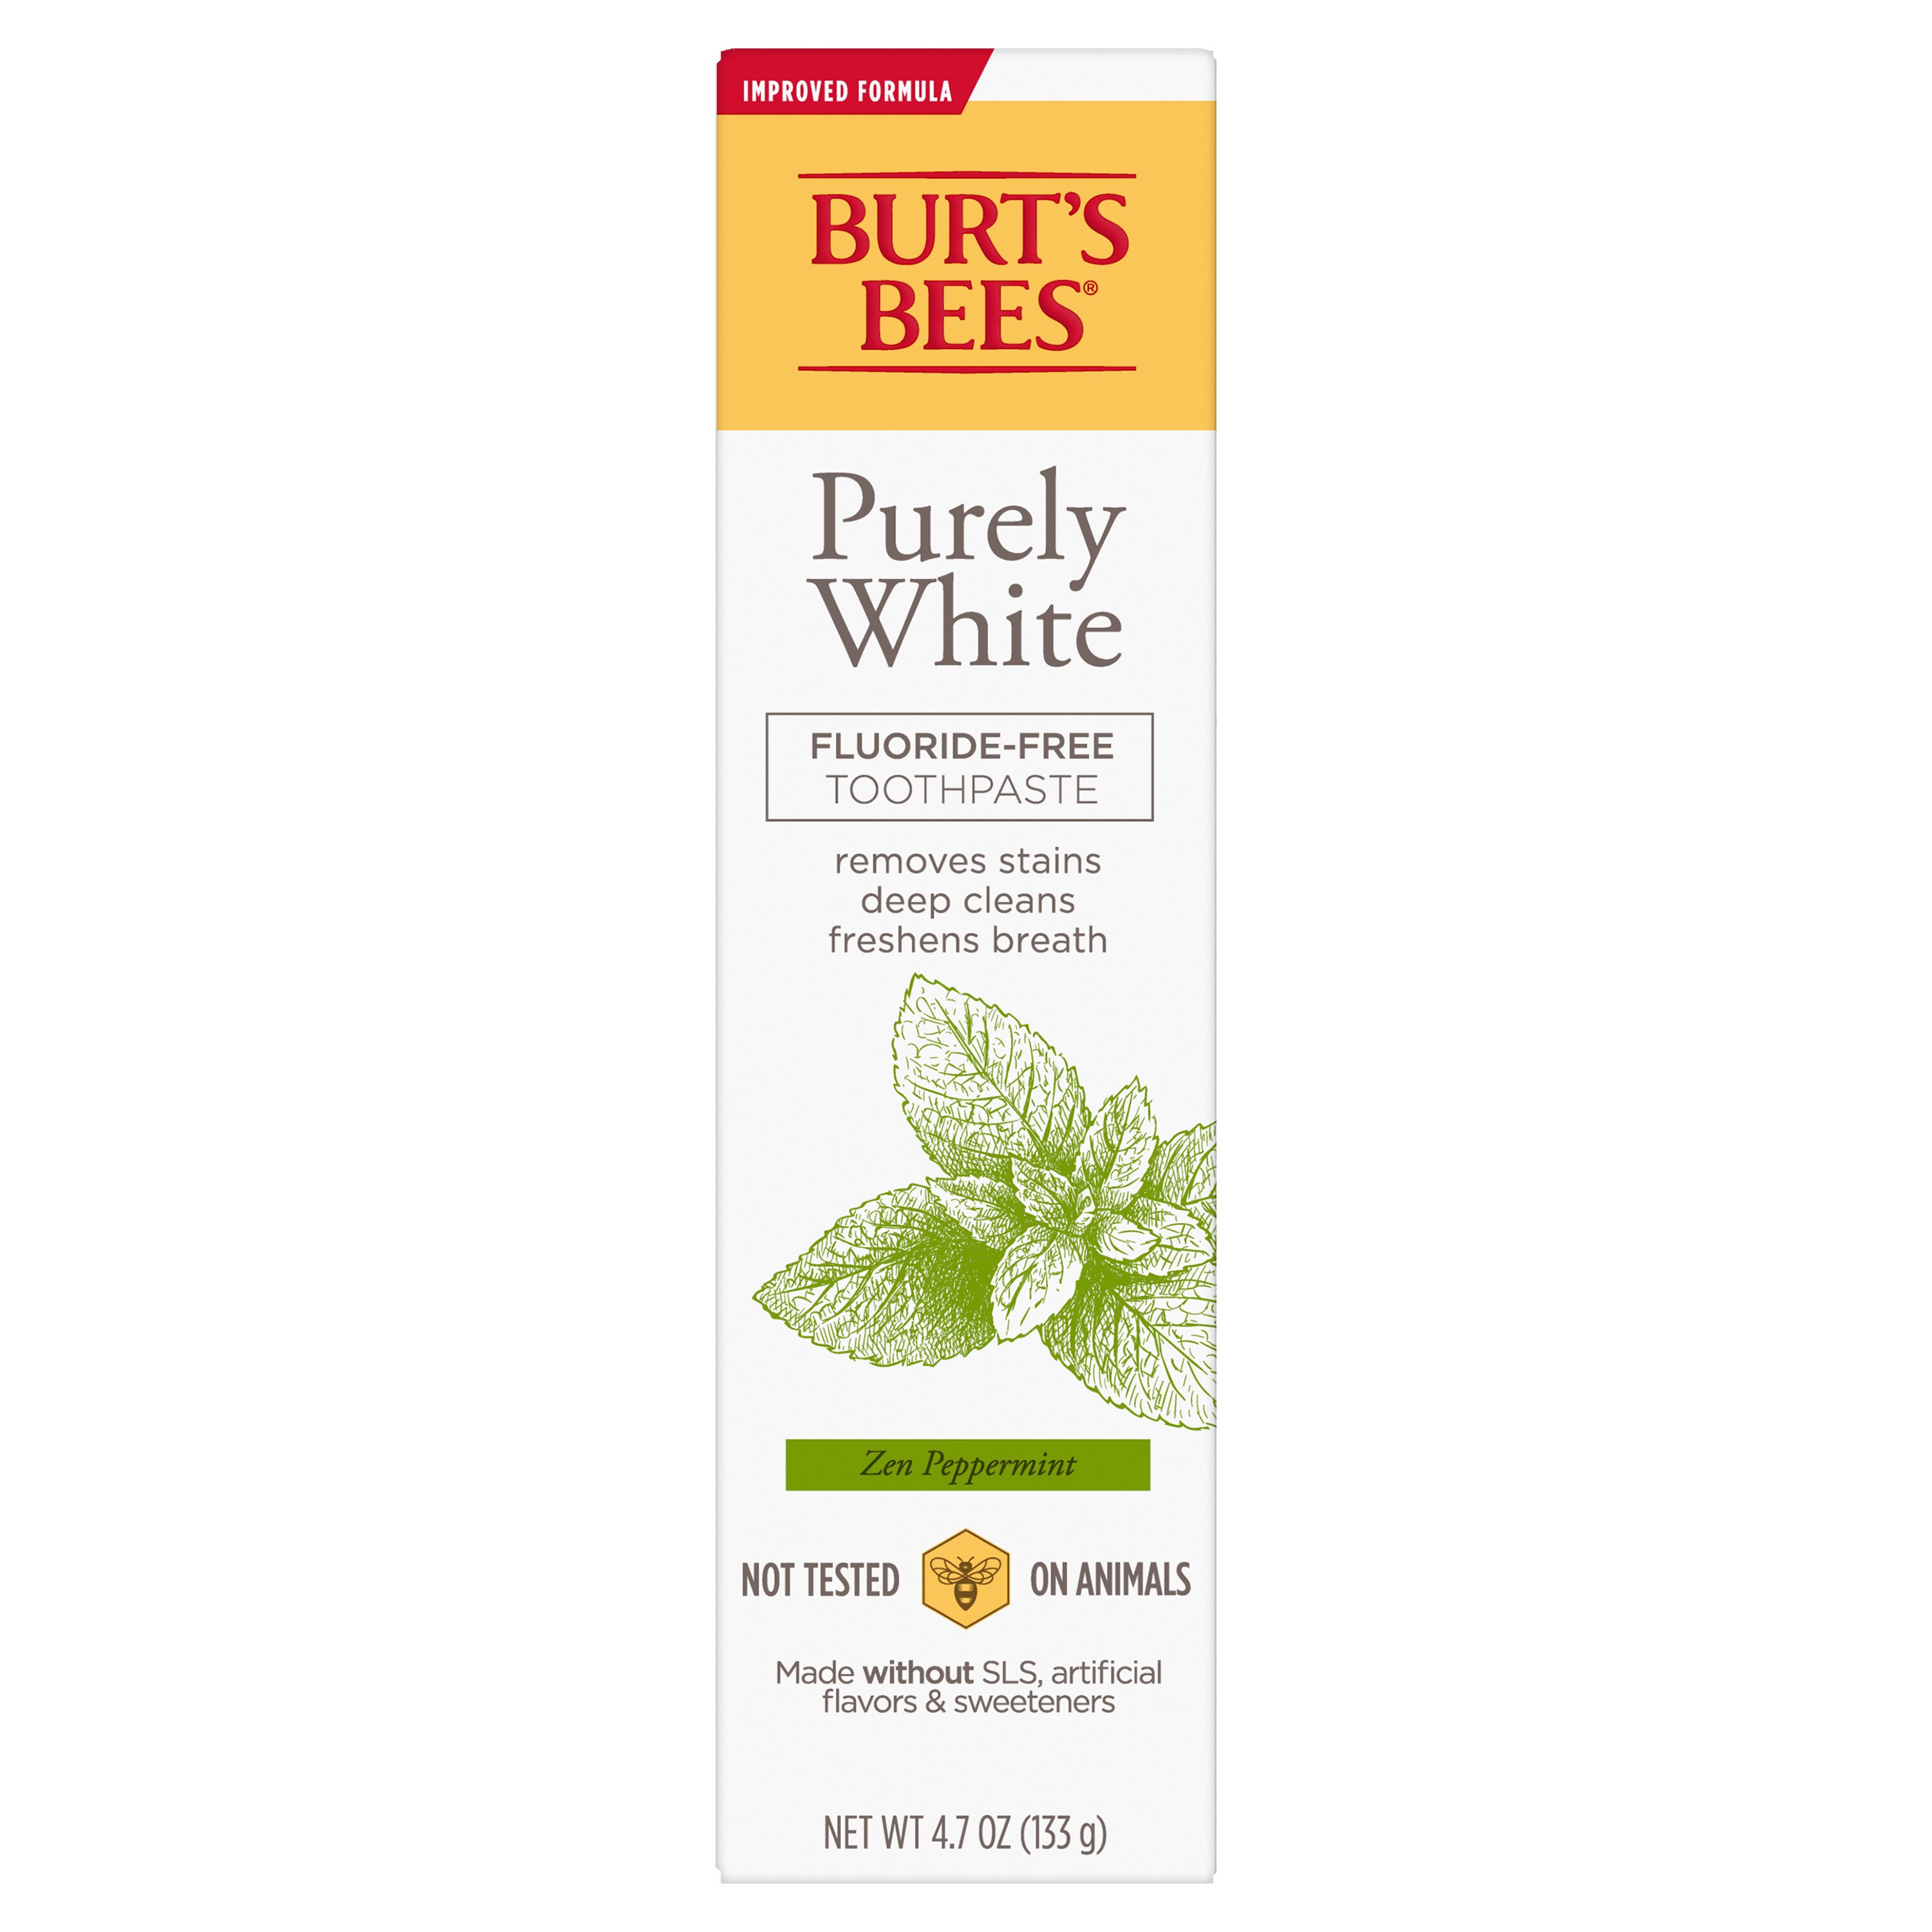 Burt's Bees Toothpaste, Natural Flavor, Fluoride-Free, Purely White, Zen Peppermint, 4.7 oz